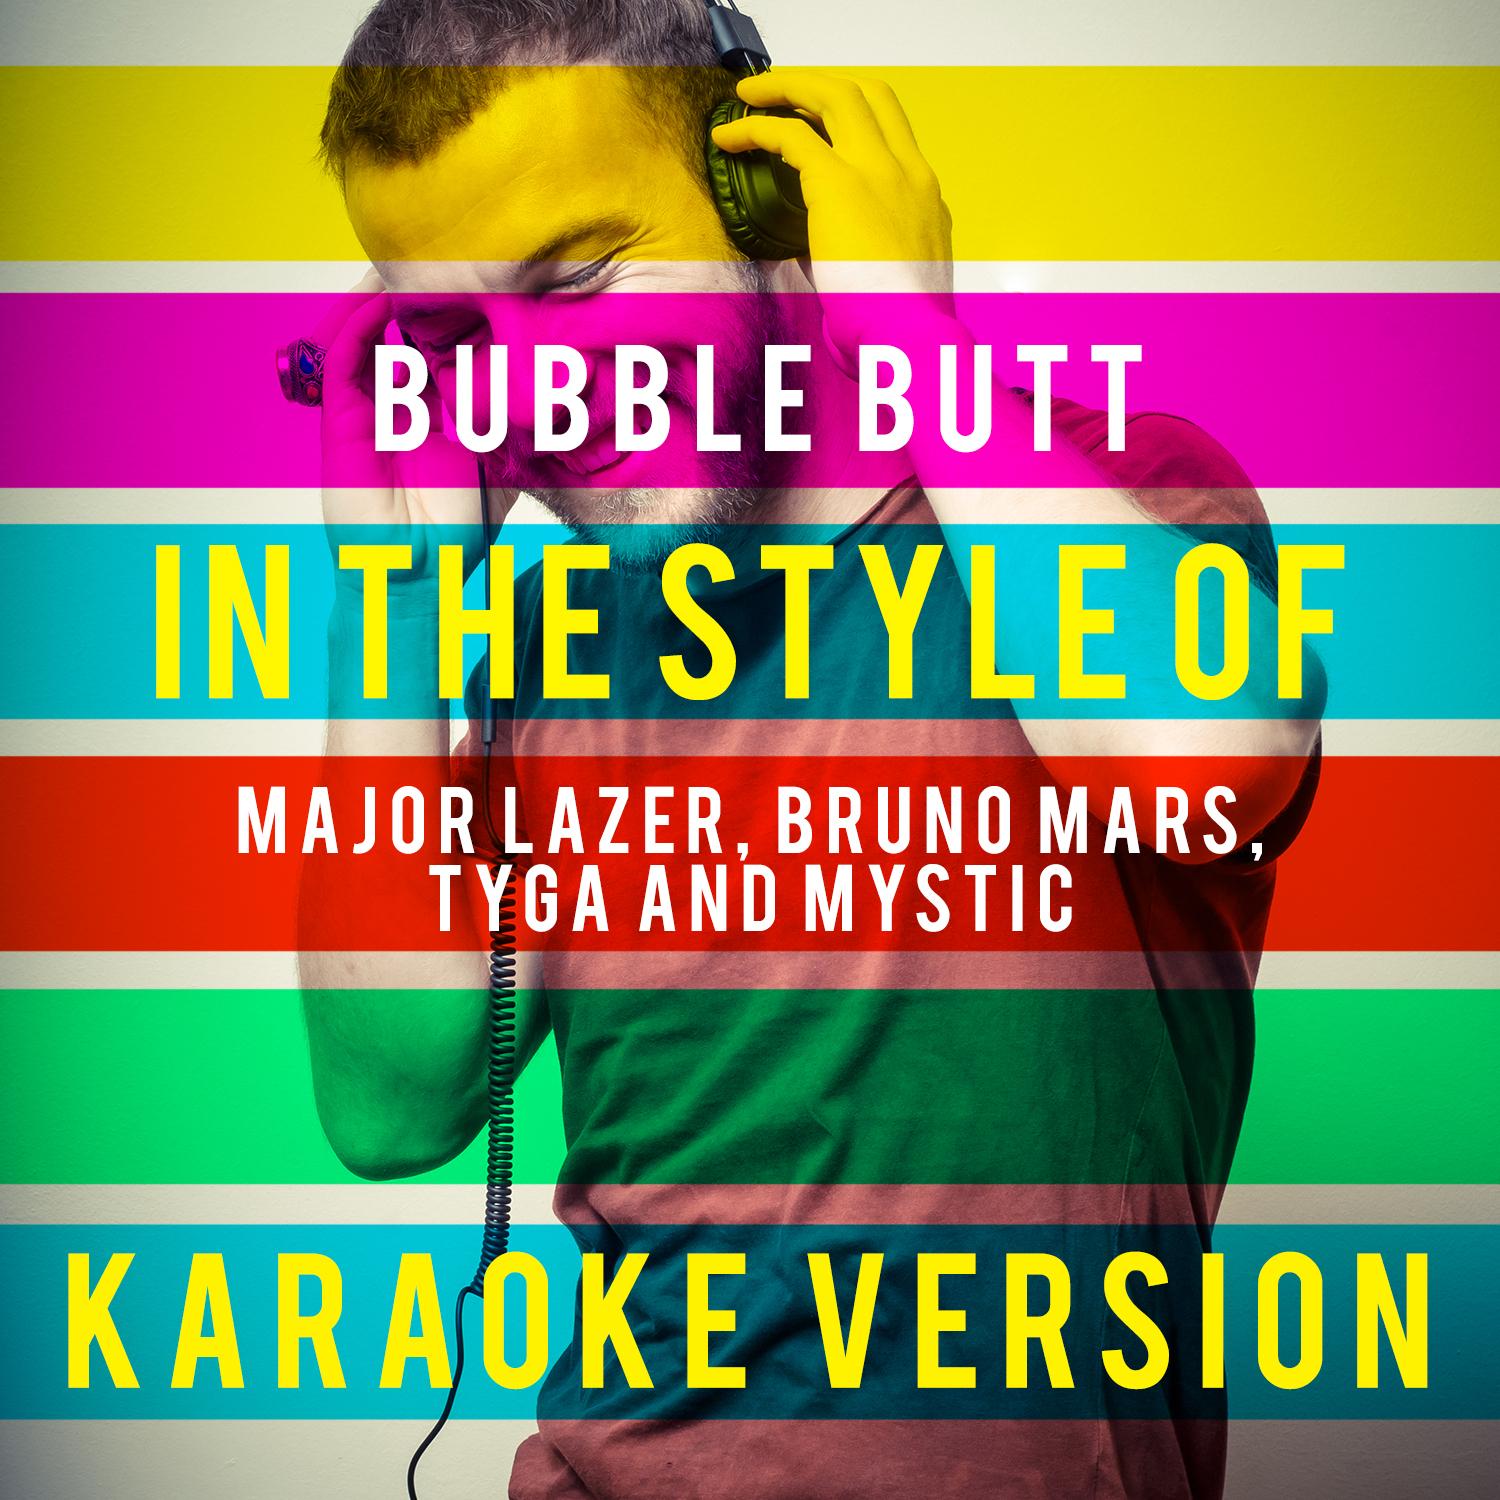 Bubble Butt (In the Style of Major Lazer, Bruno Mars, Tyga and Mystic) [Karaoke Version] - Single